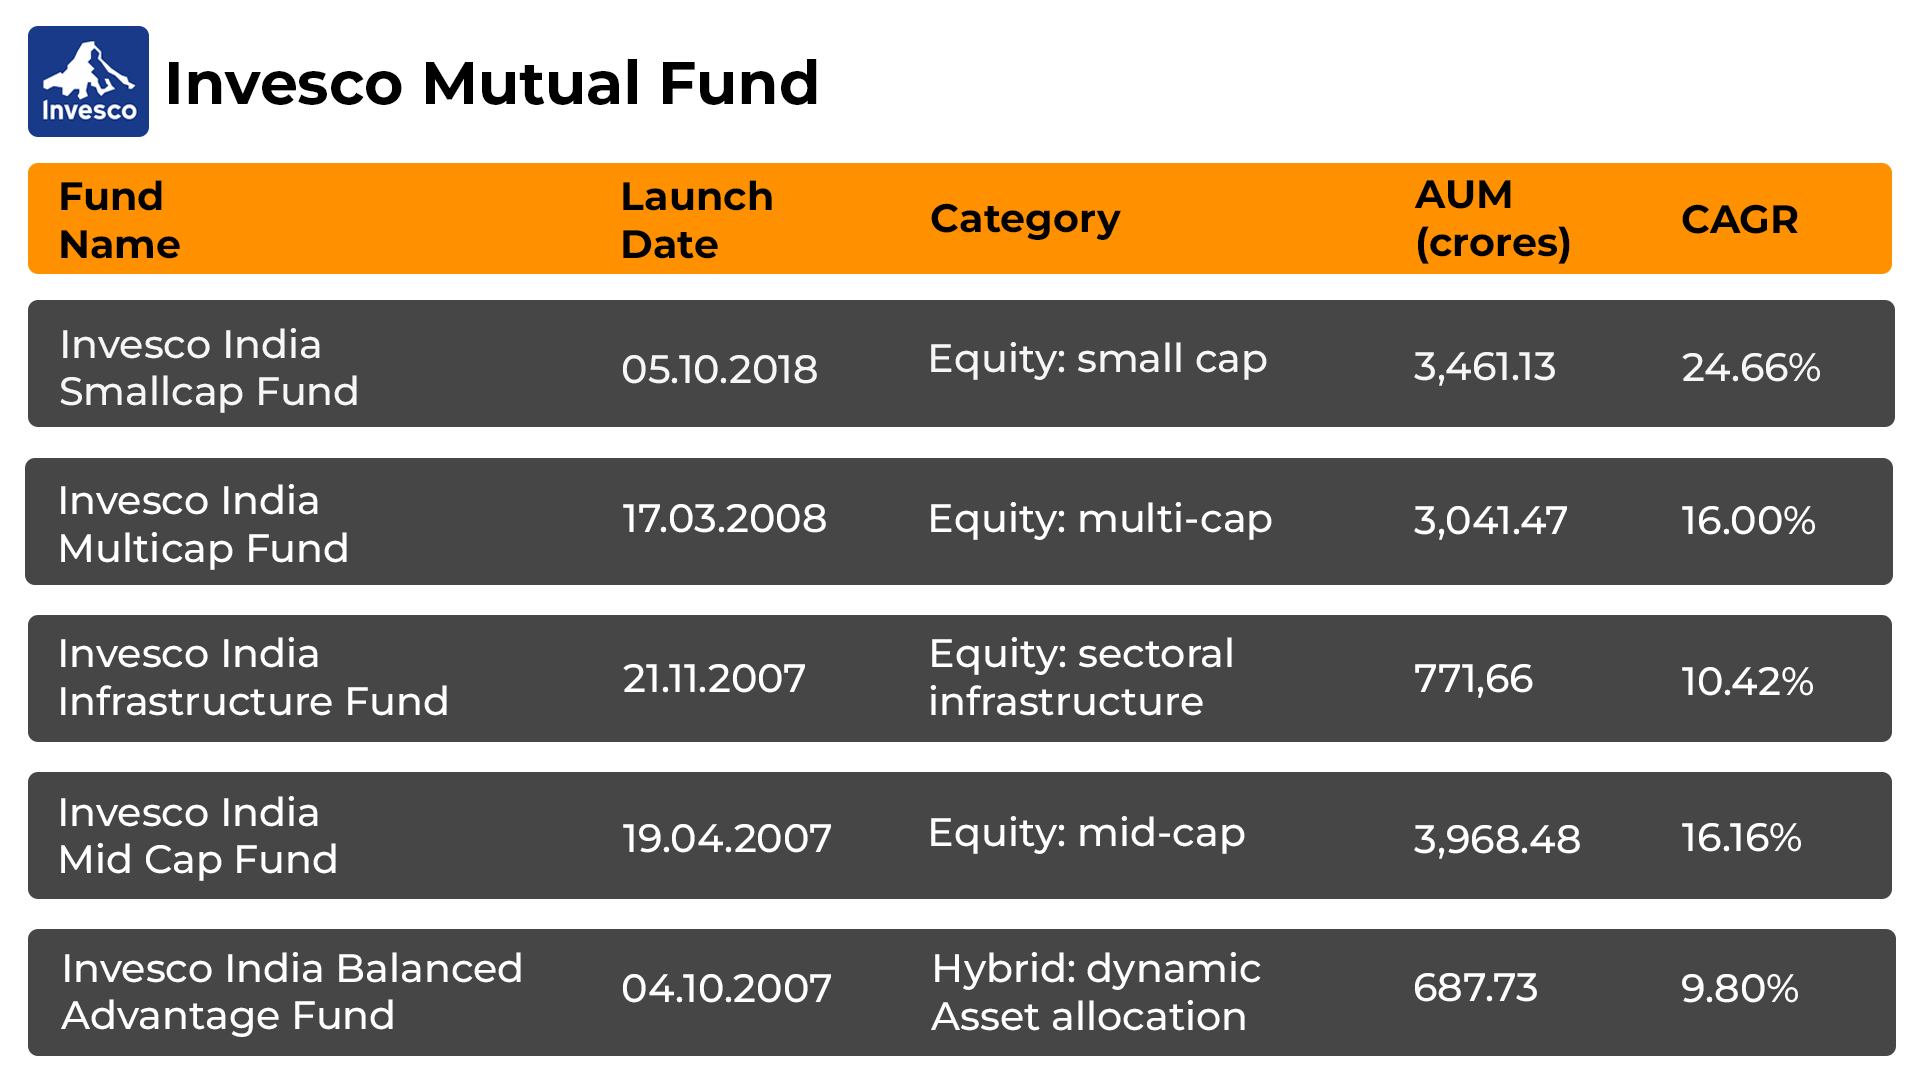 Top 5 Invesco Mutual Fund